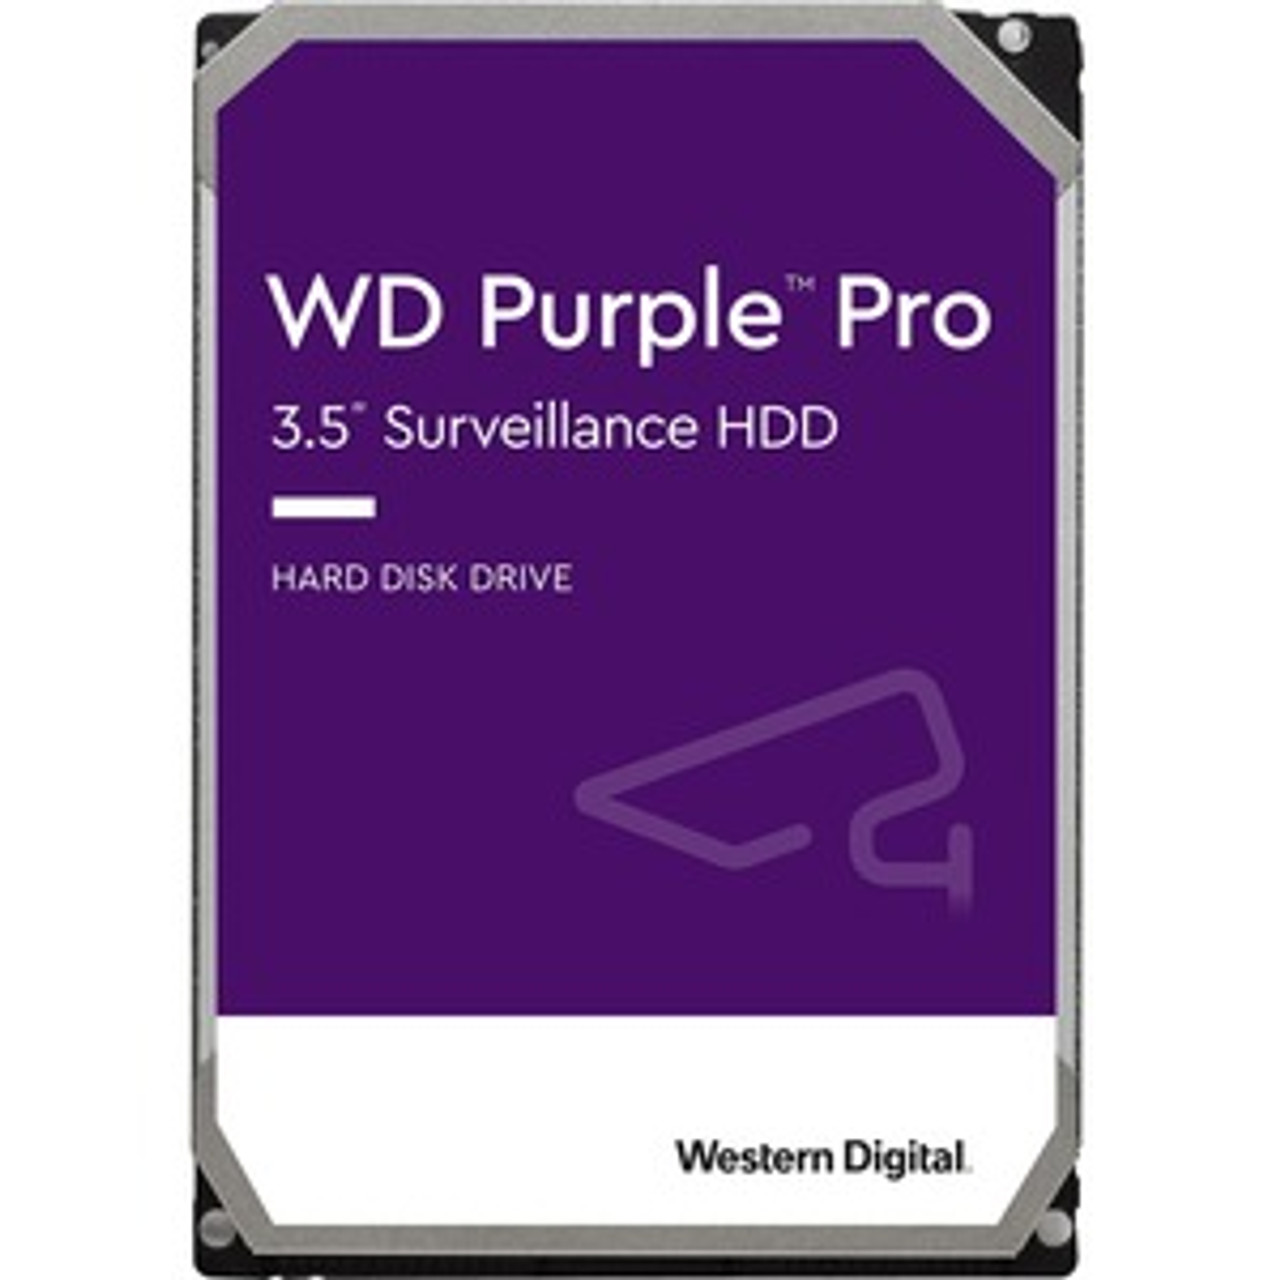 WD181PURP Western Digital Purple Pro 18TB 7200RPM SATA 6Gbps 512MB Cache 3.5-inch Internal Hard Drive